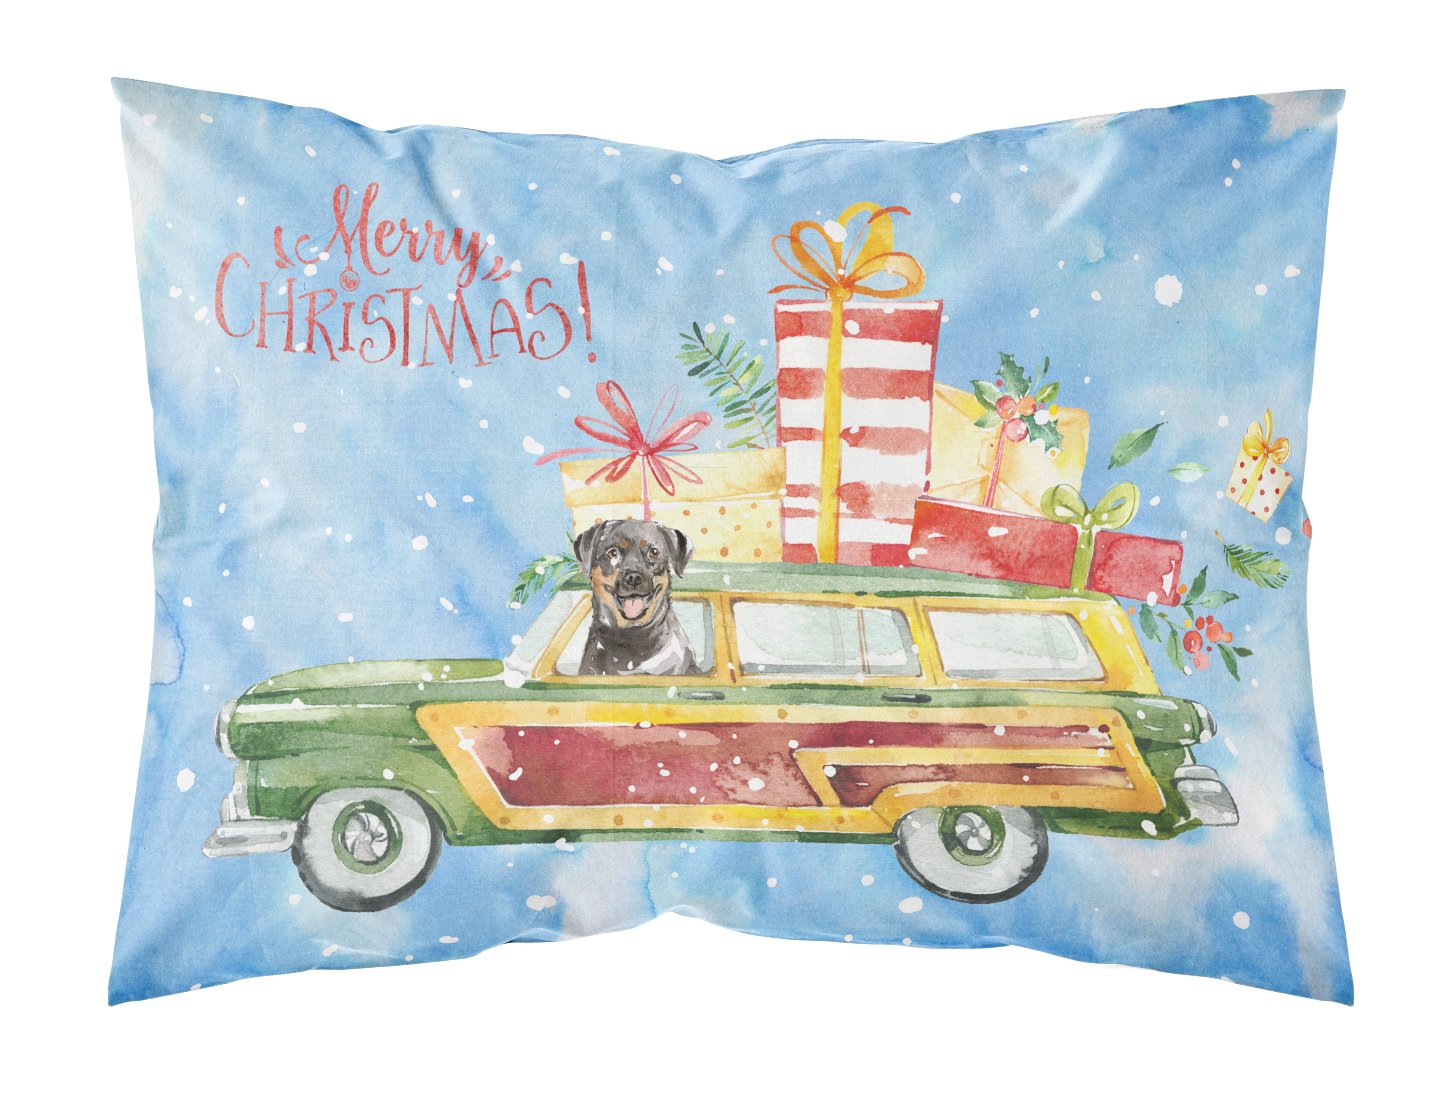 Merry Christmas Rottweiler Fabric Standard Pillowcase CK2417PILLOWCASE by Caroline's Treasures